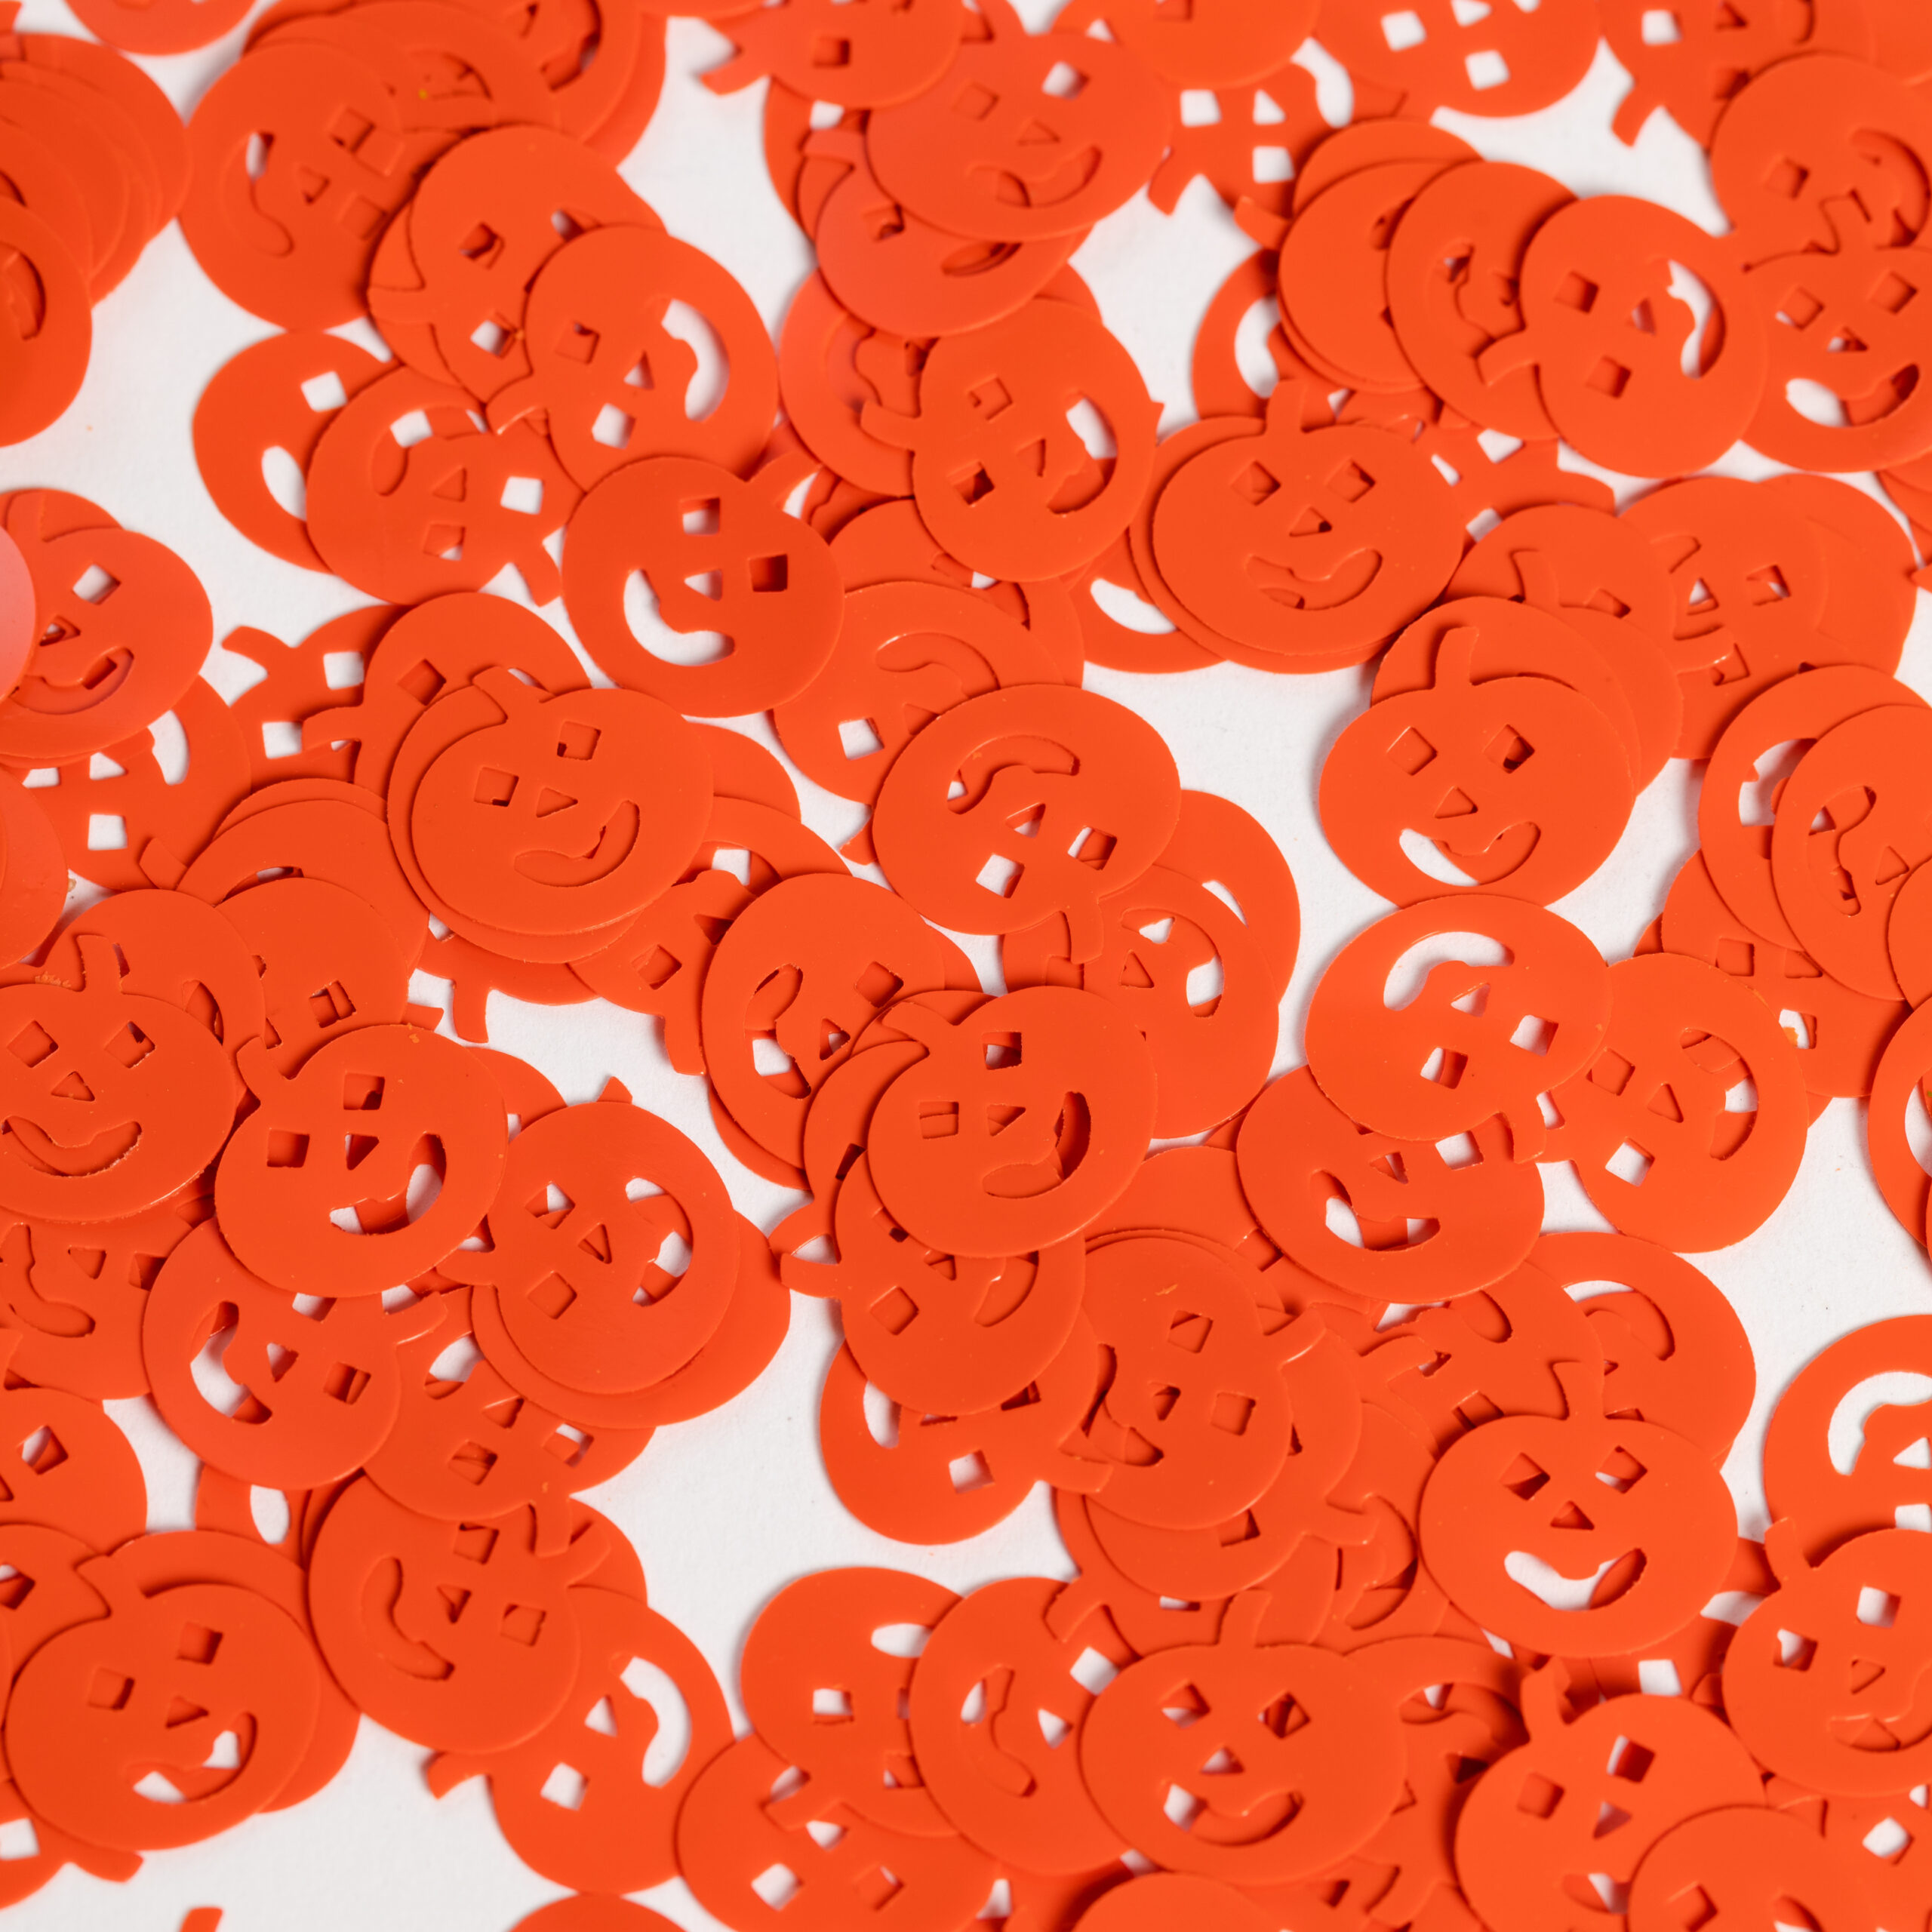 Sier-Confetti Pompoenen Oranje 14gram